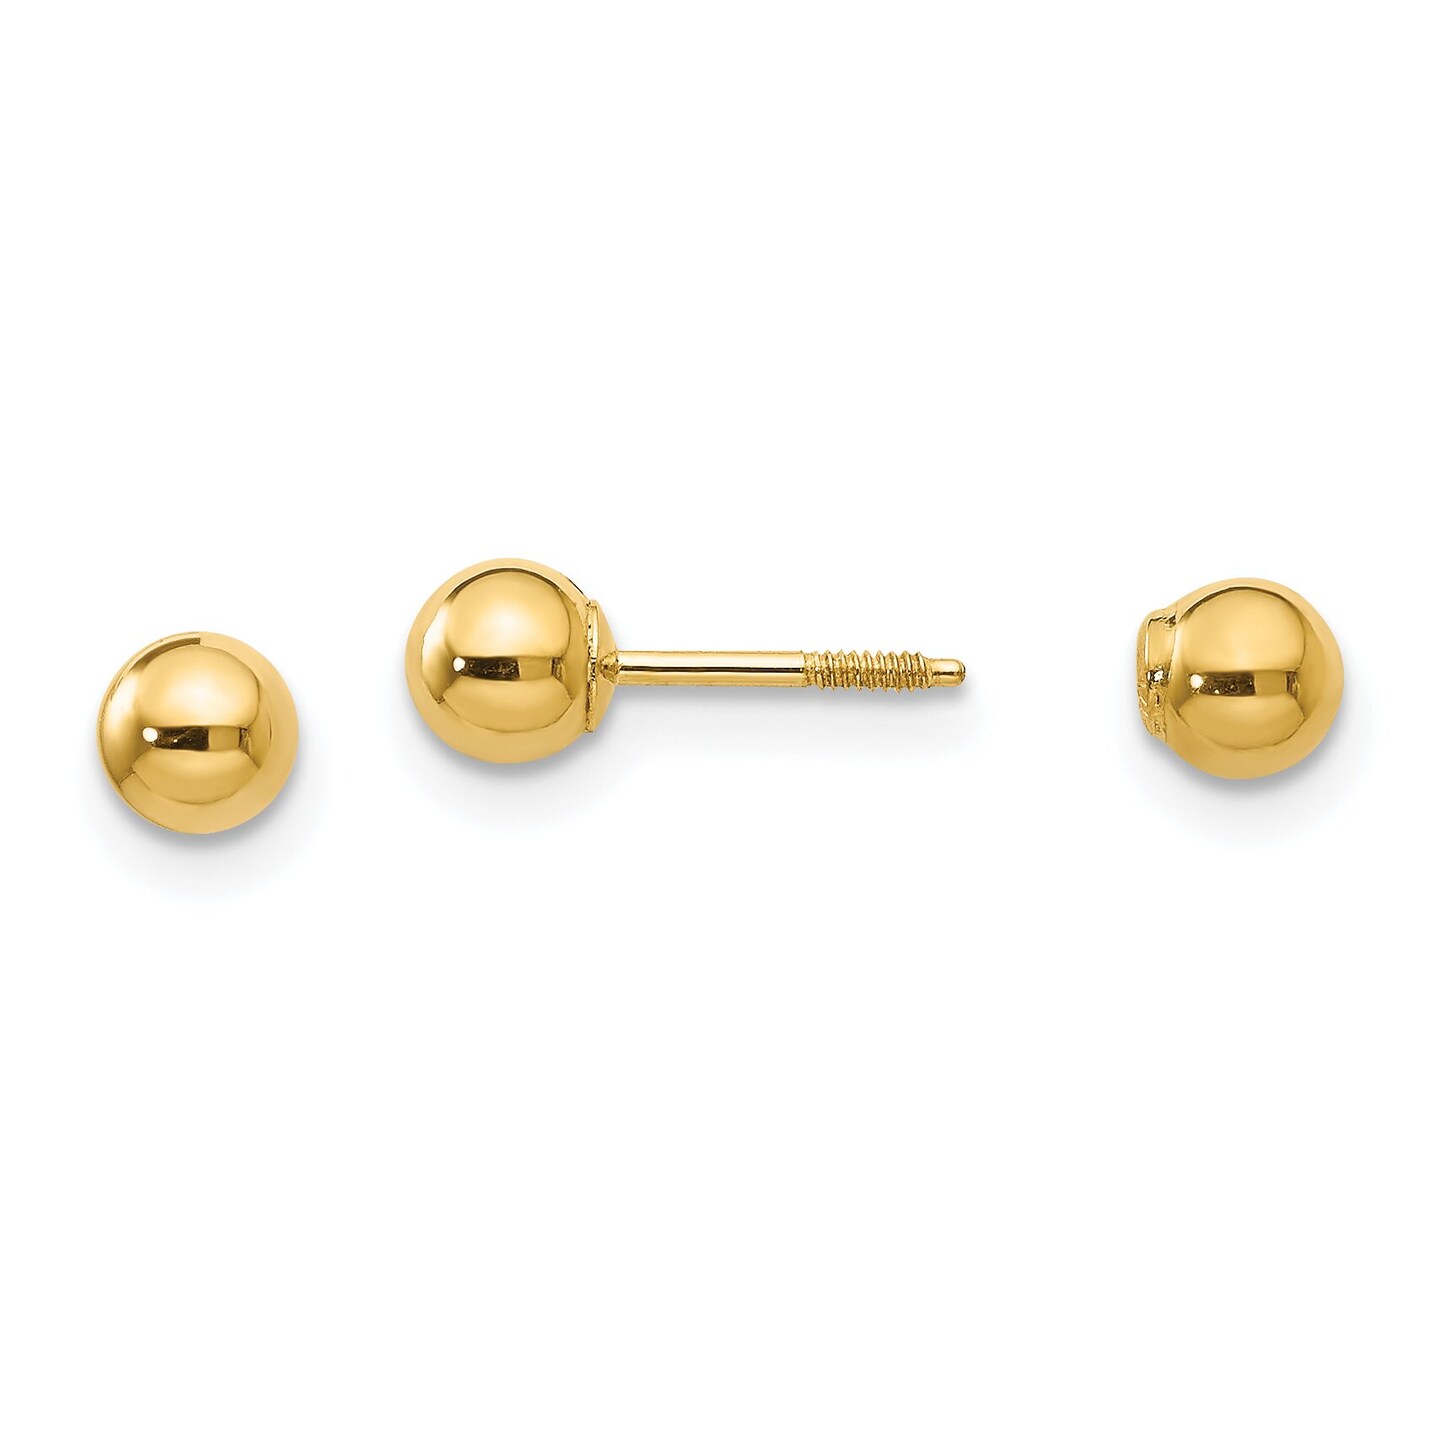 14K Yellow Gold Reversible Ball Earrings Jewelry 11mm x 4mm